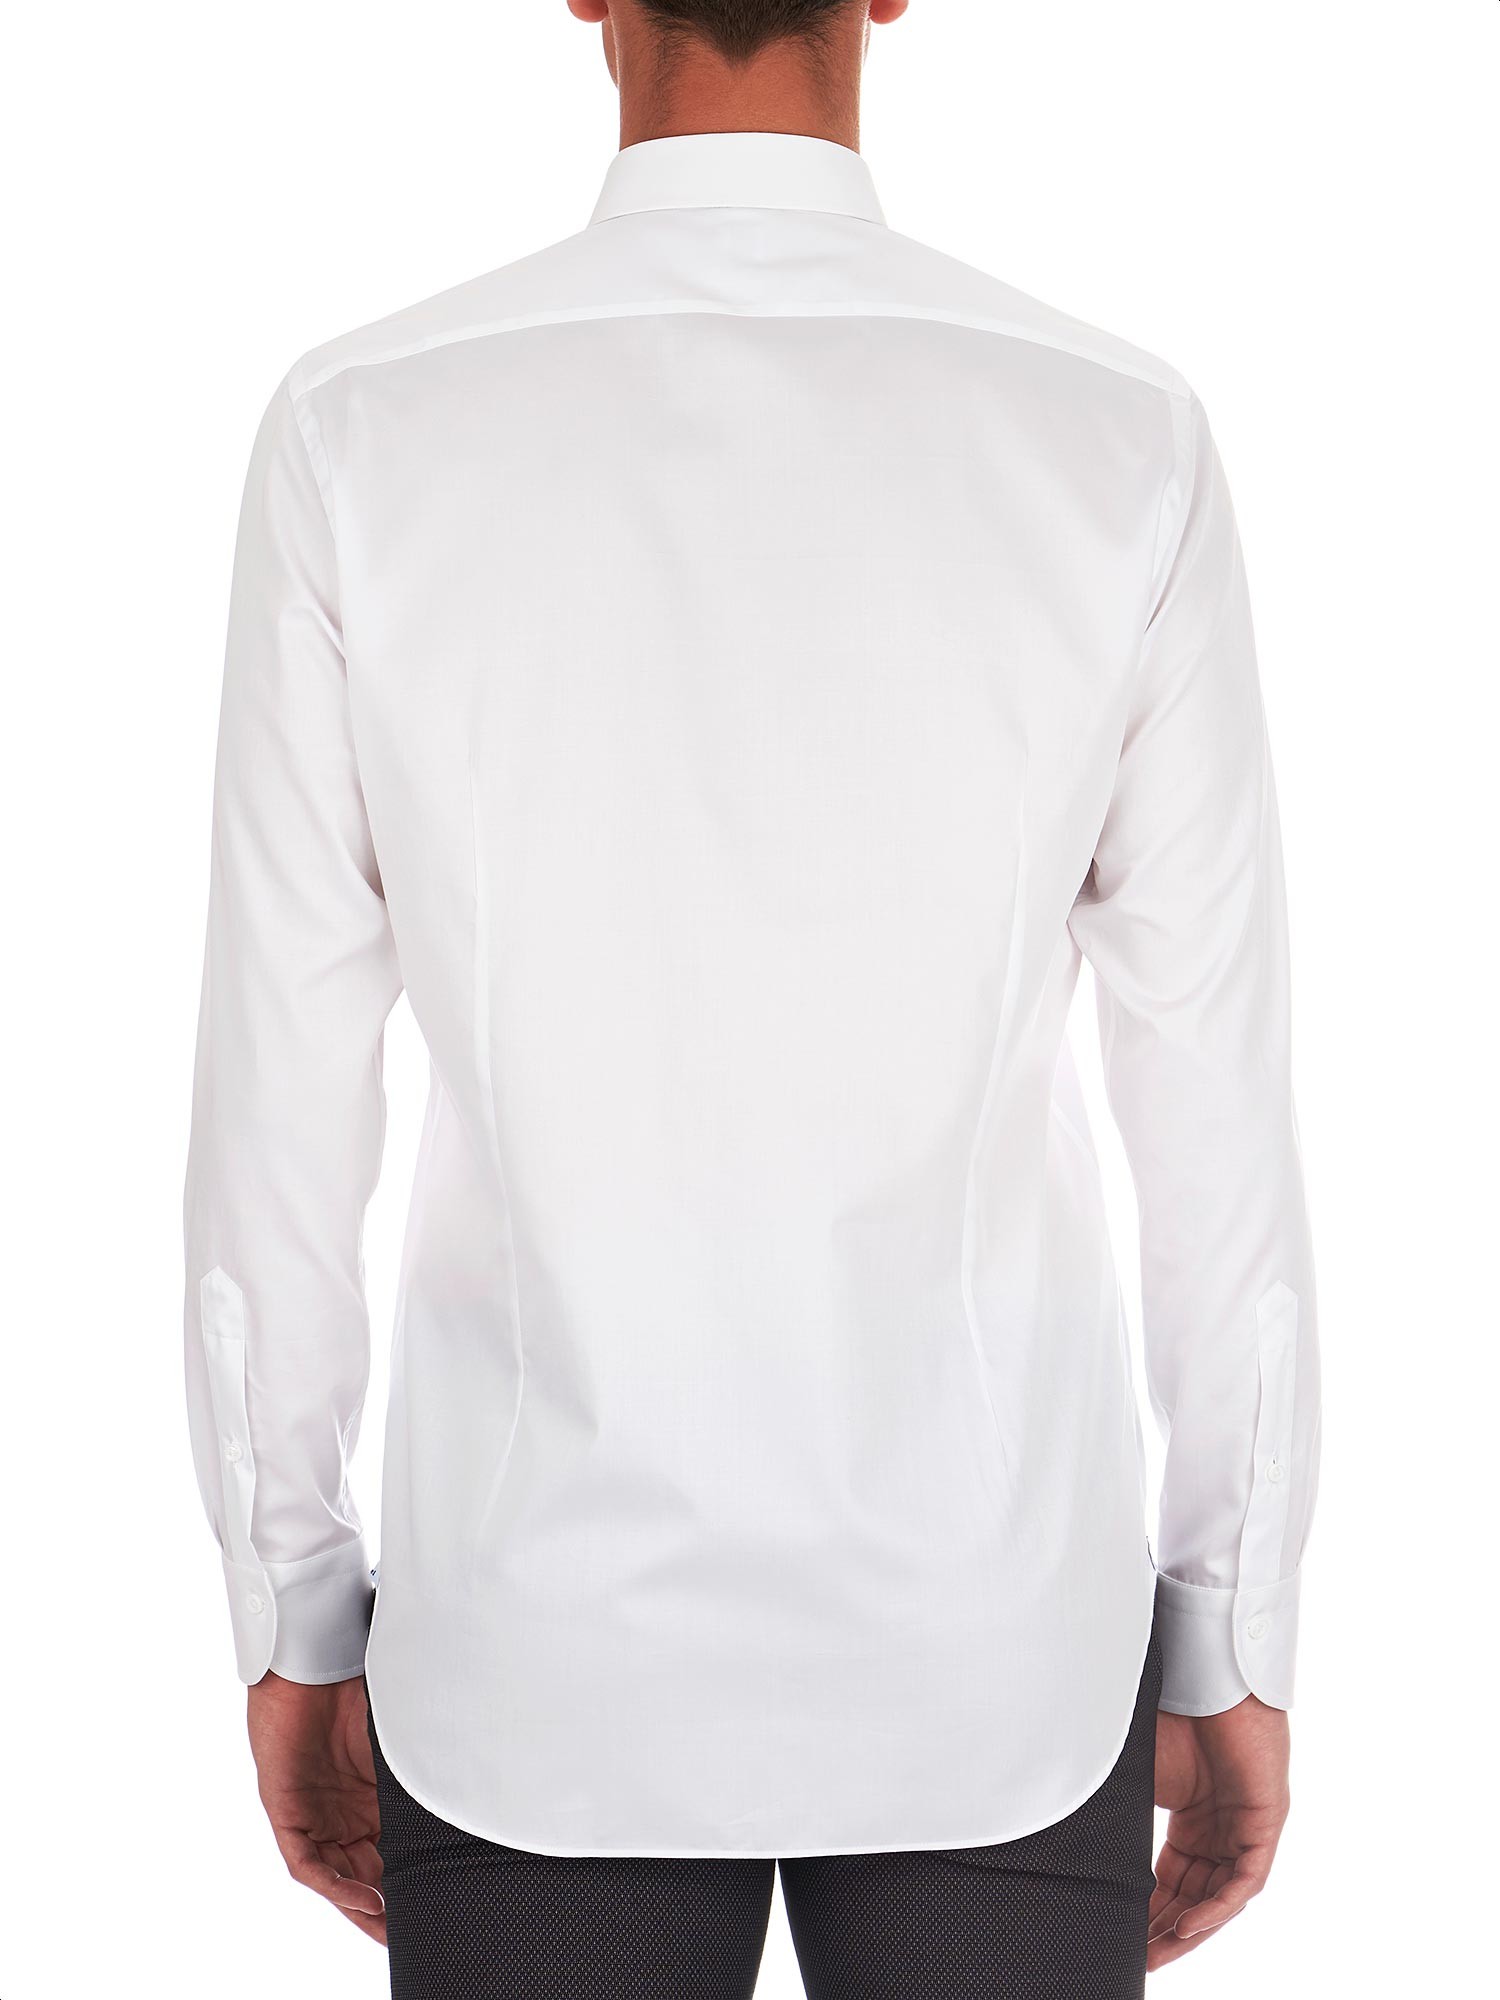 Càrrel - White cotton shirt for men